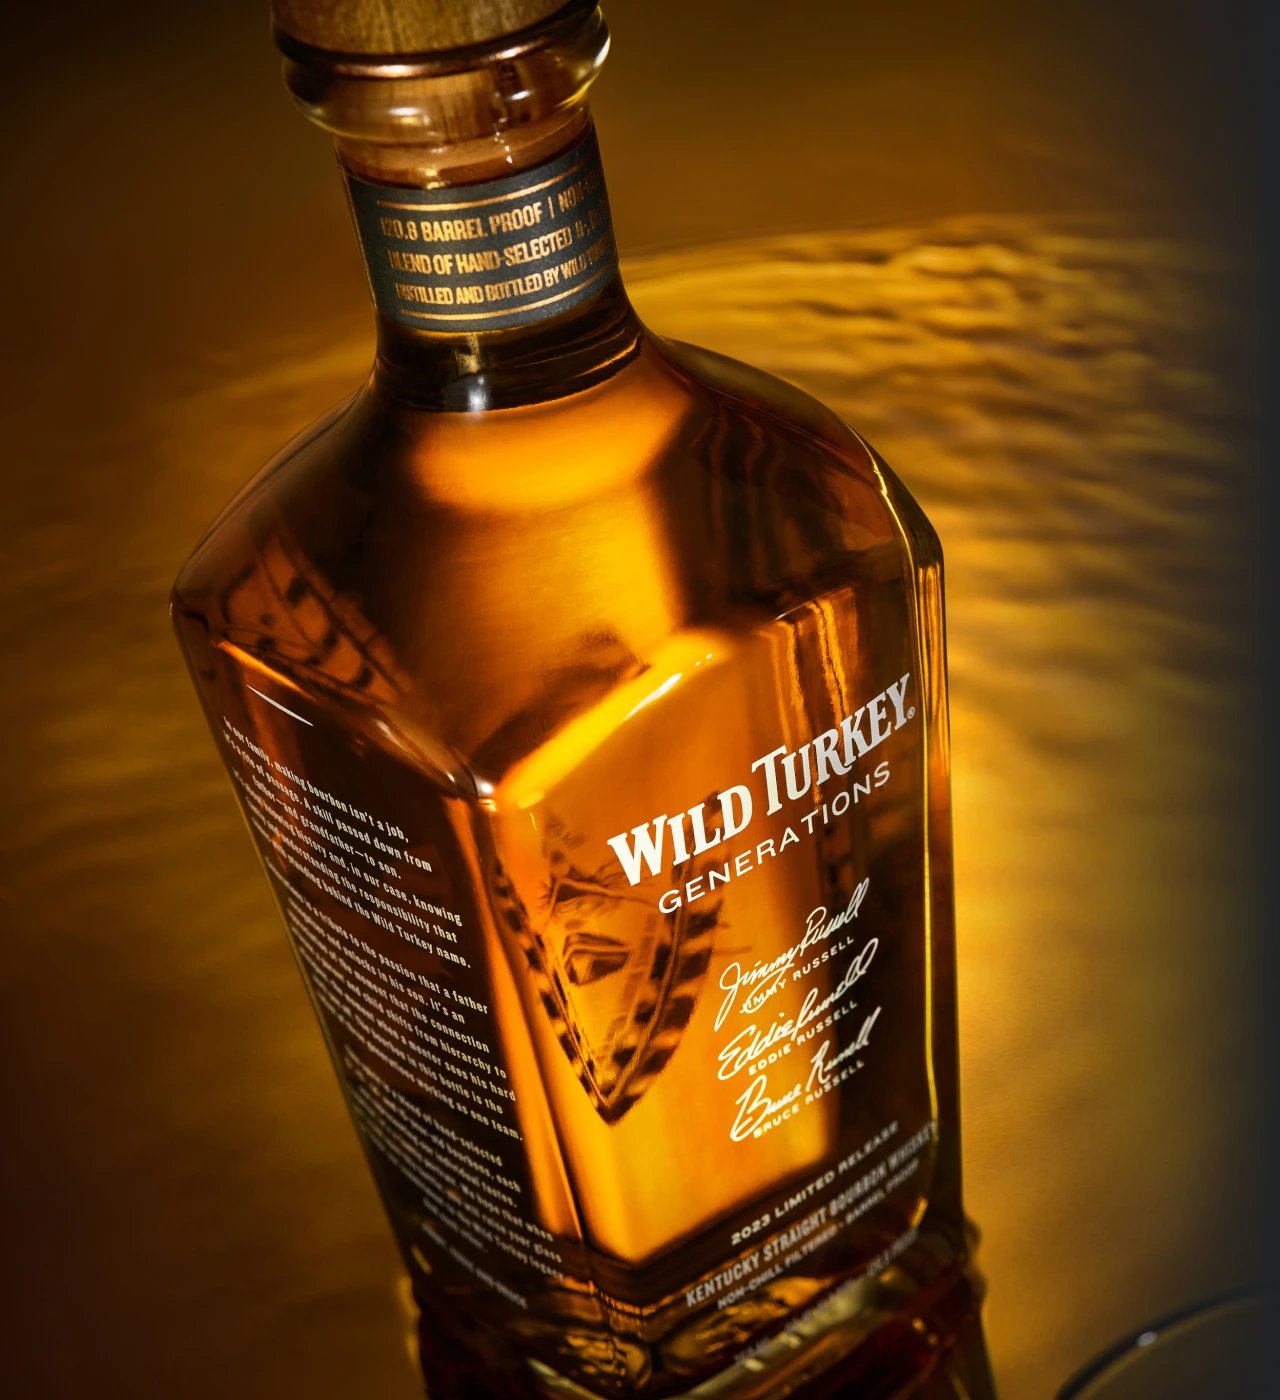 Limited edition Generations bourbon whiskey Wild Turkey enus